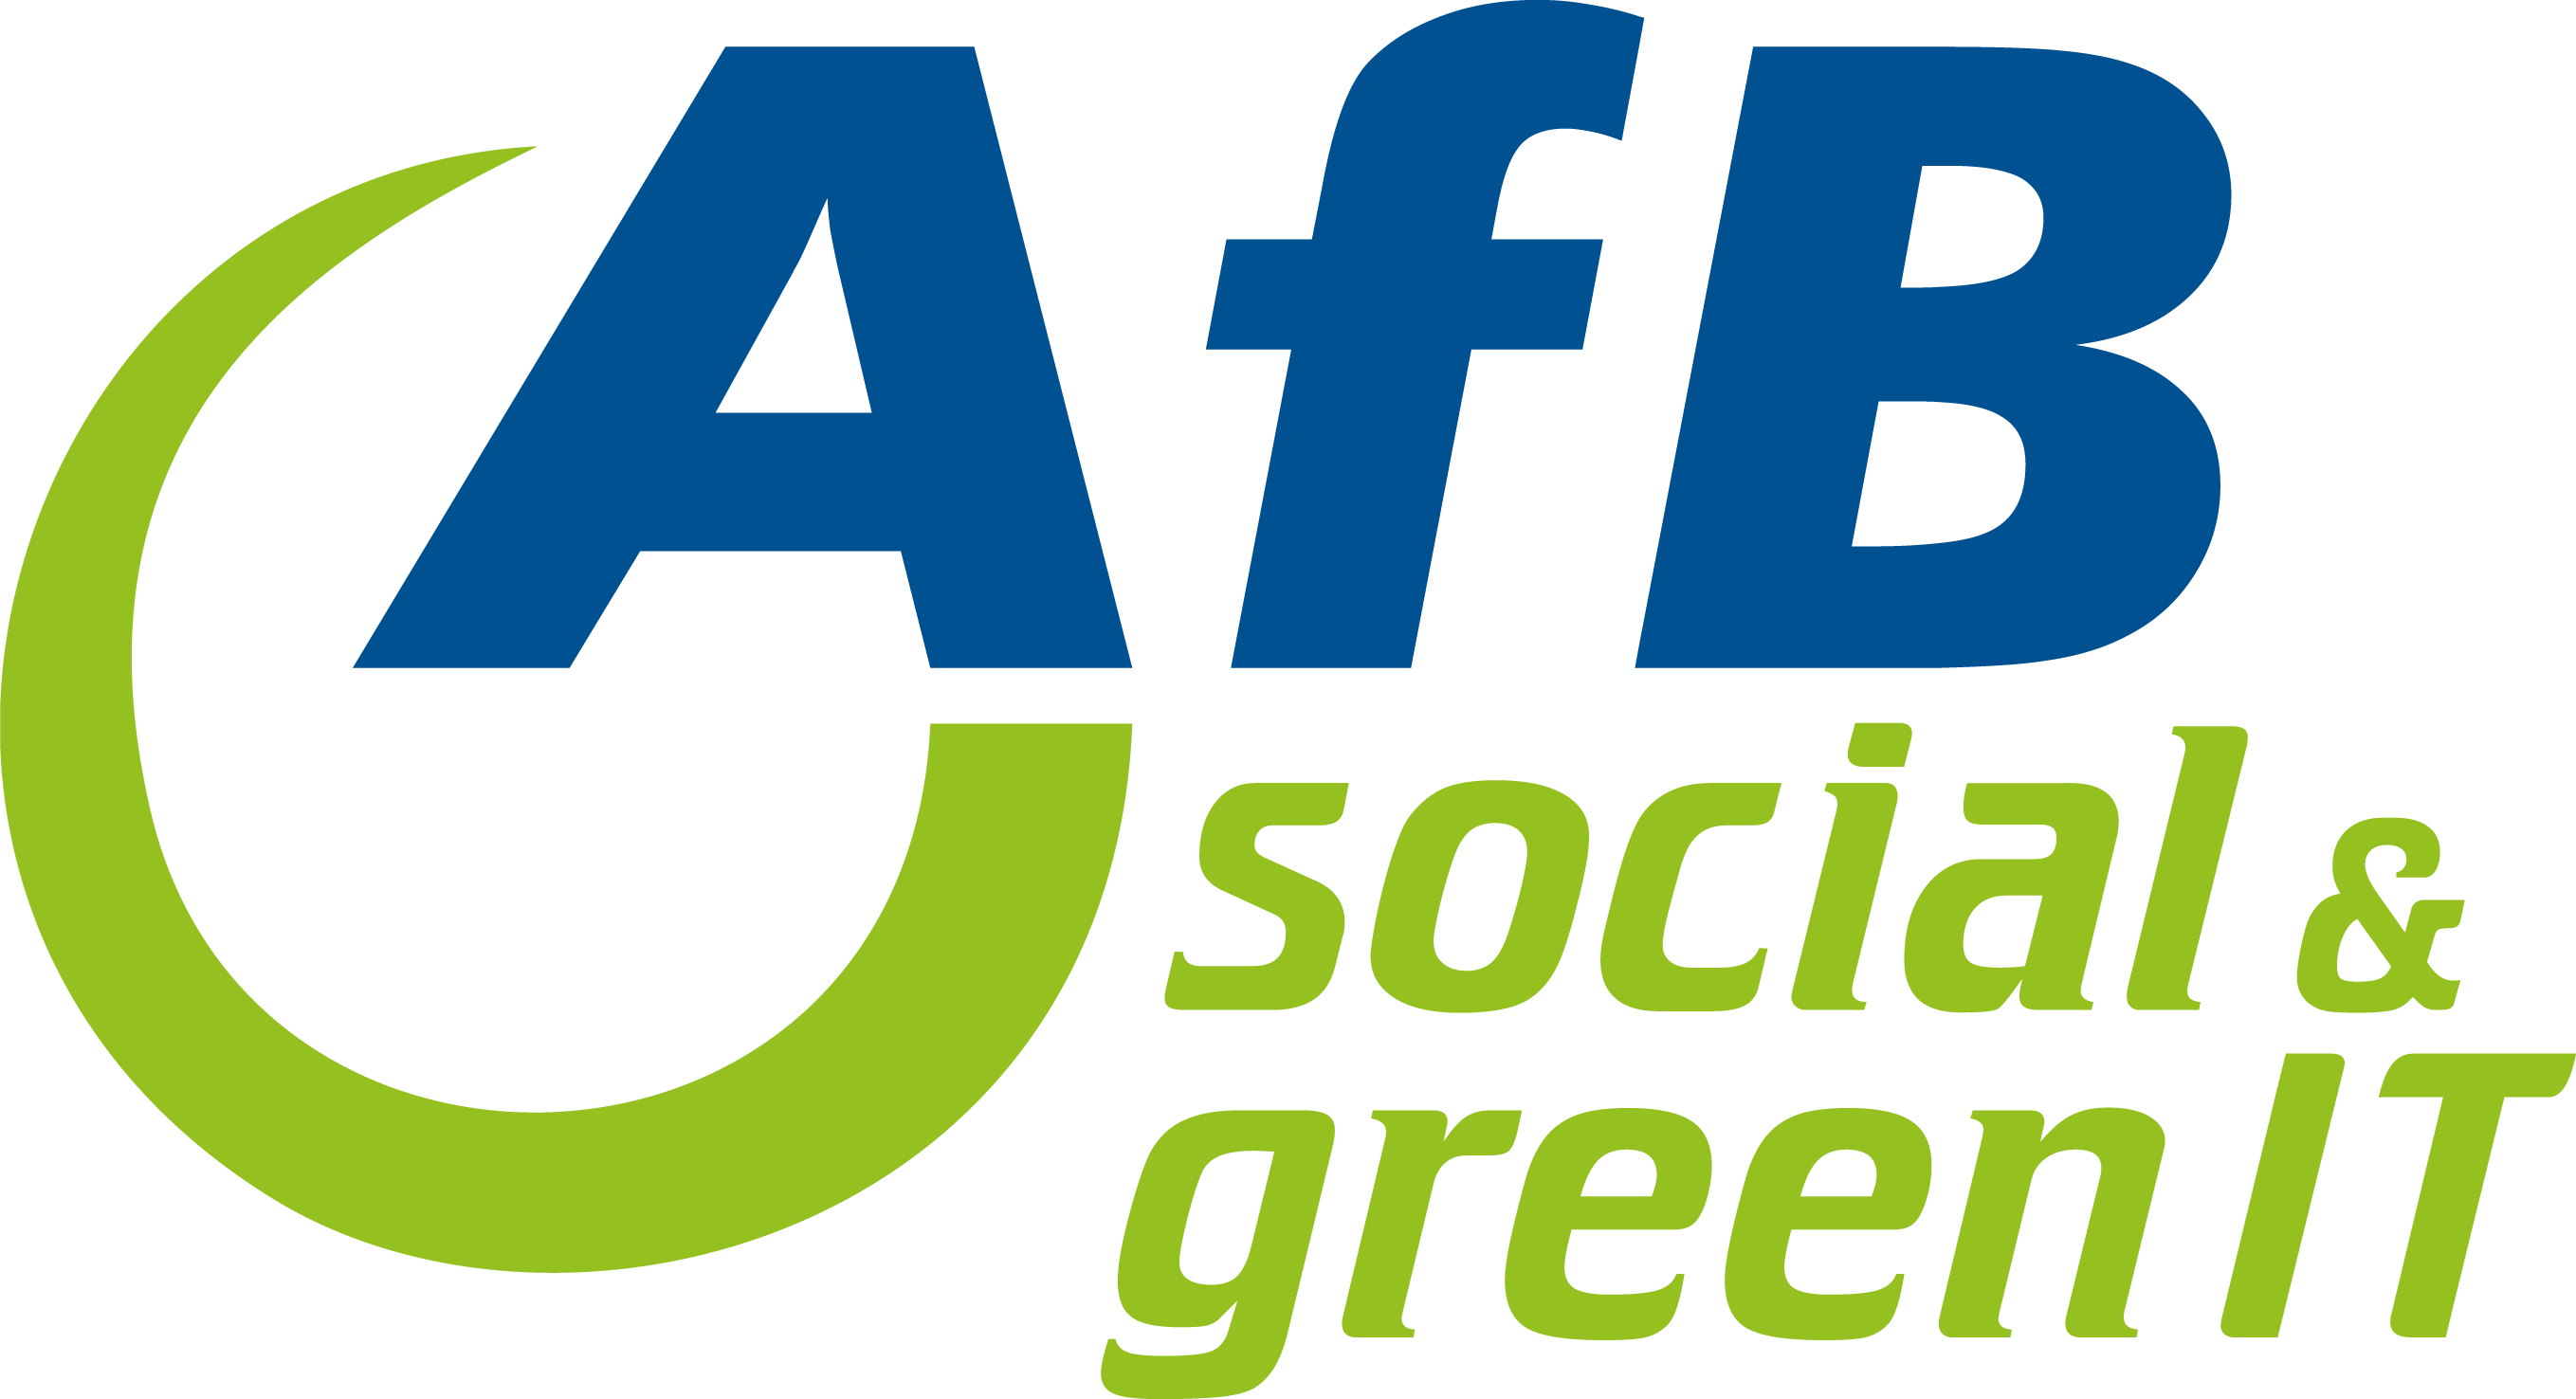 Logo AfB social & green IT